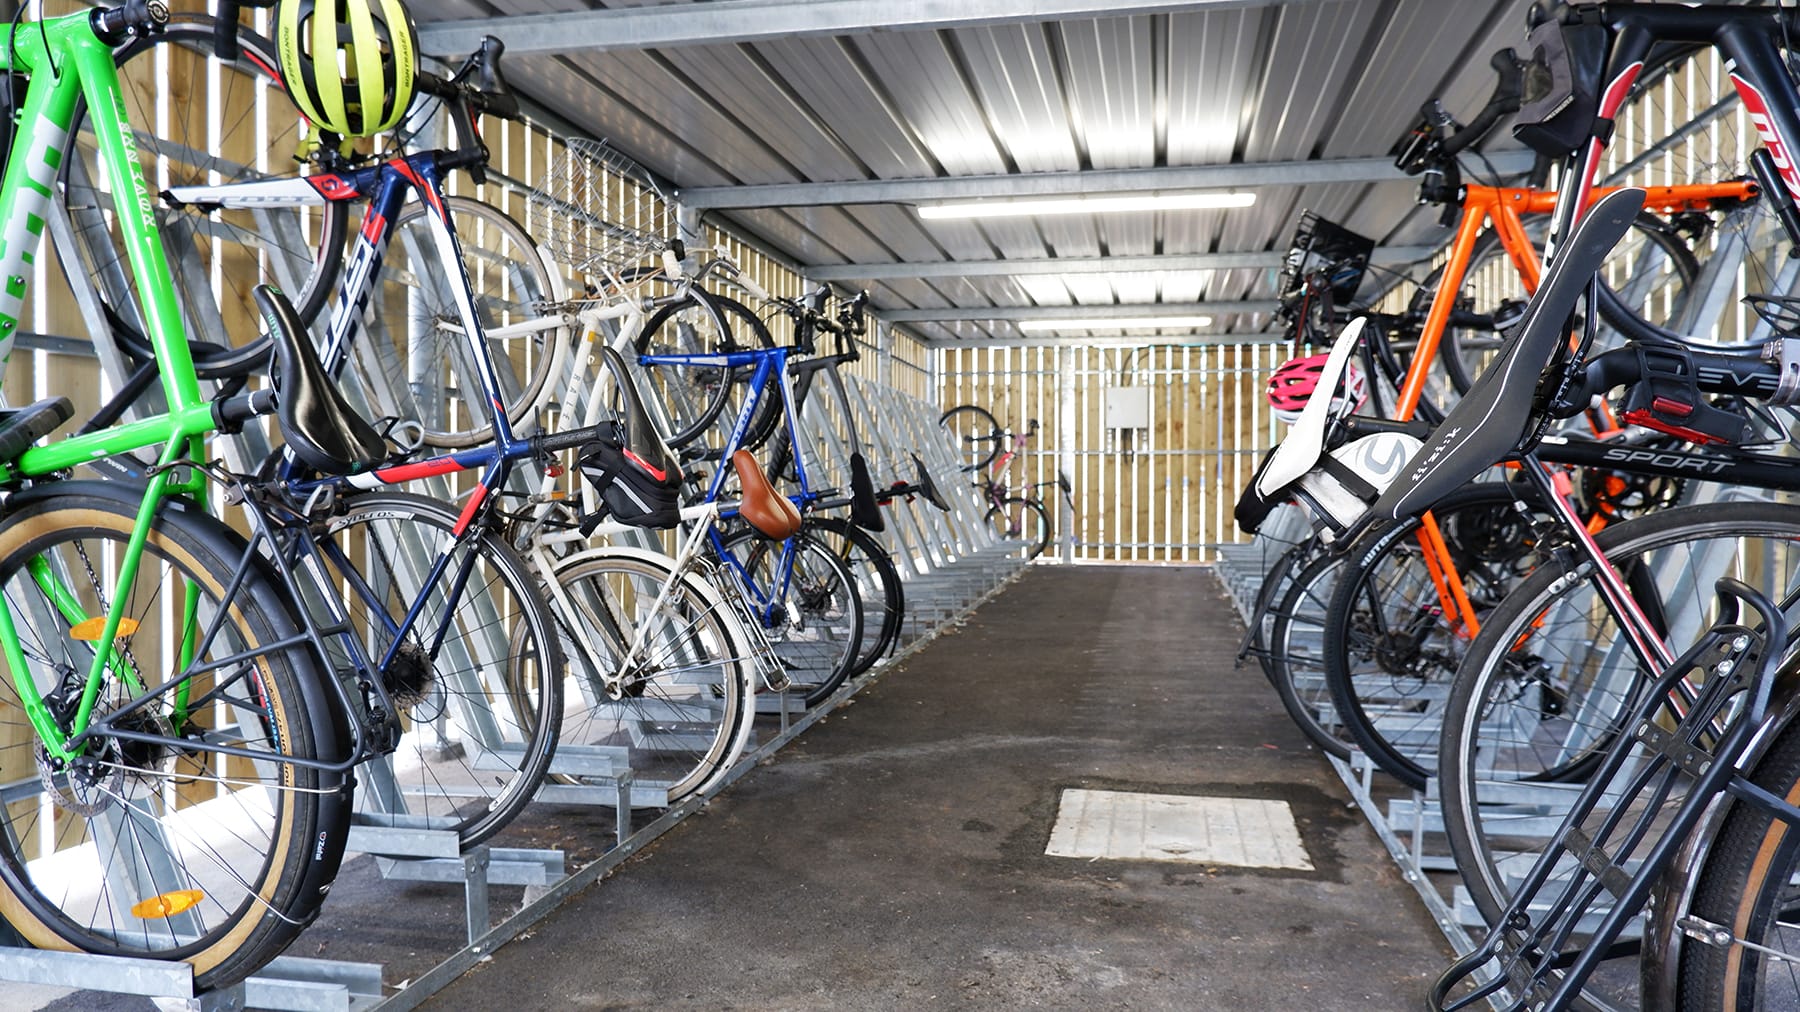 nhs kingston cycle shelter bike racks